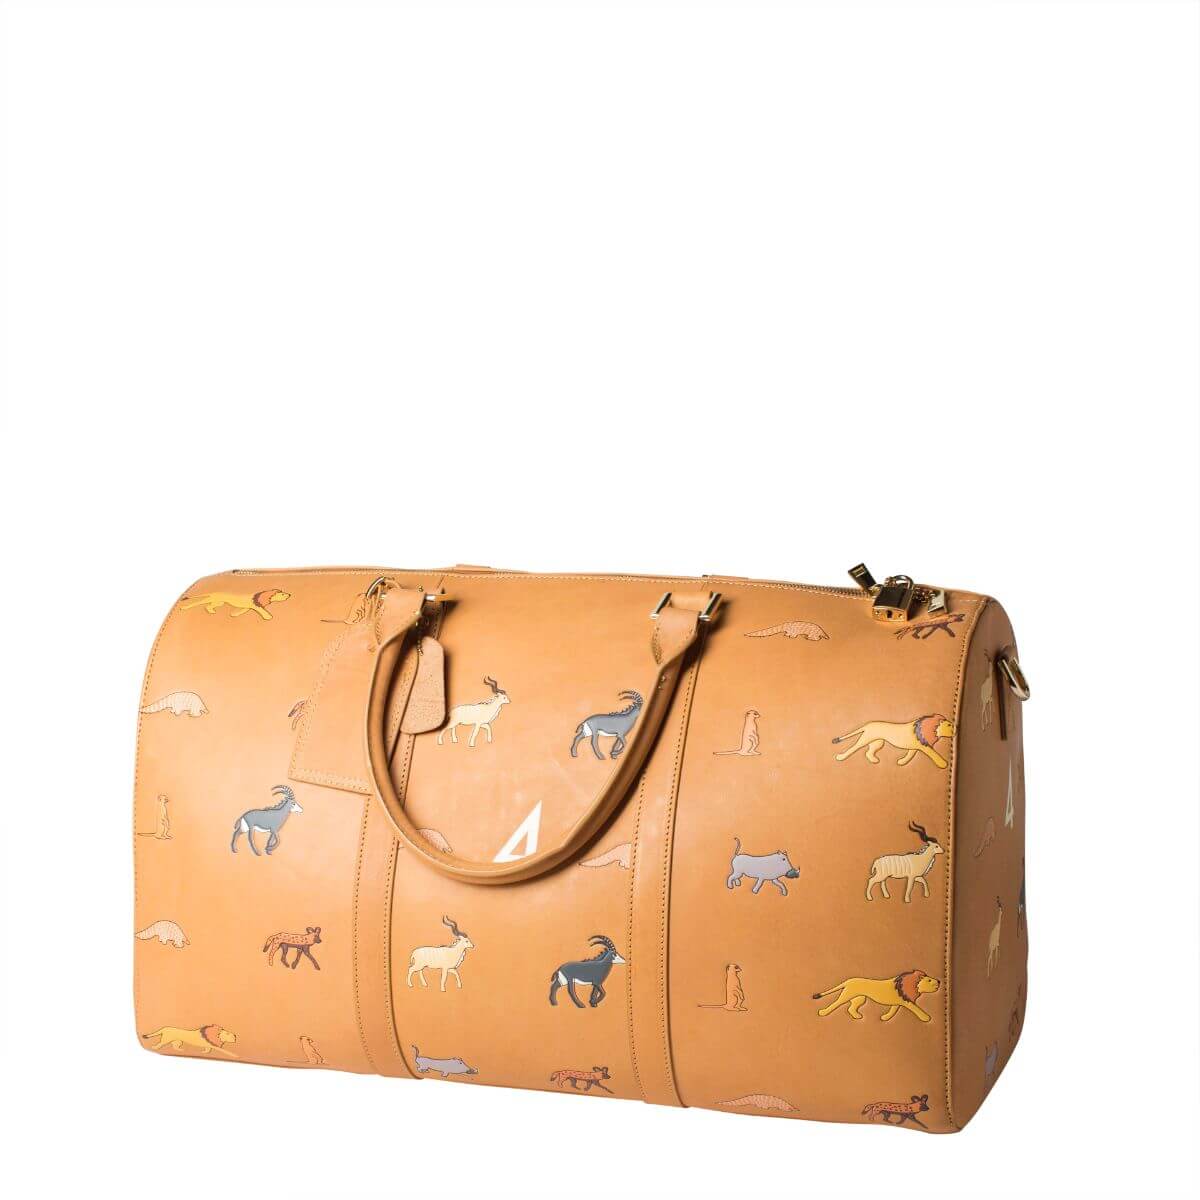 The Darjeeling Limited Louis Vuitton bags